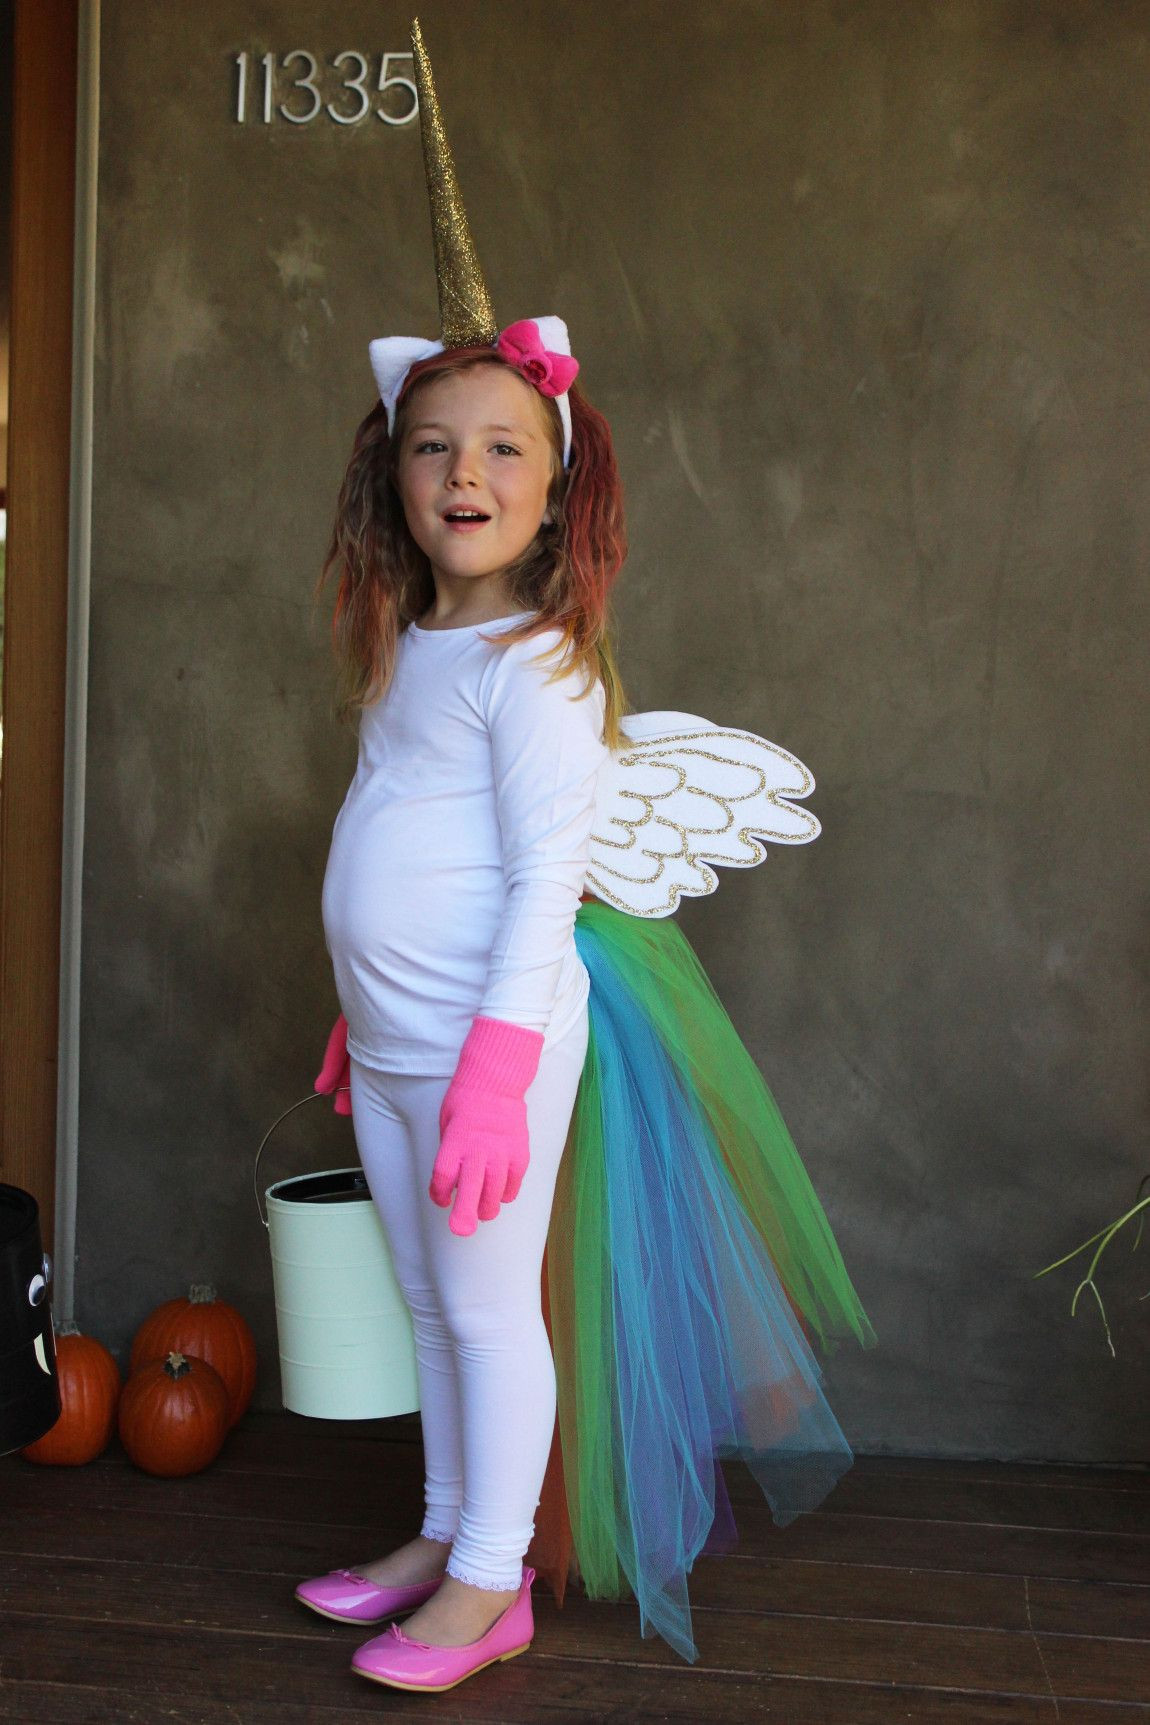 DIY Halloween Costume Ideas For Kids
 50 Incredibly Awesome Yet Easy DIY Halloween Costumes For